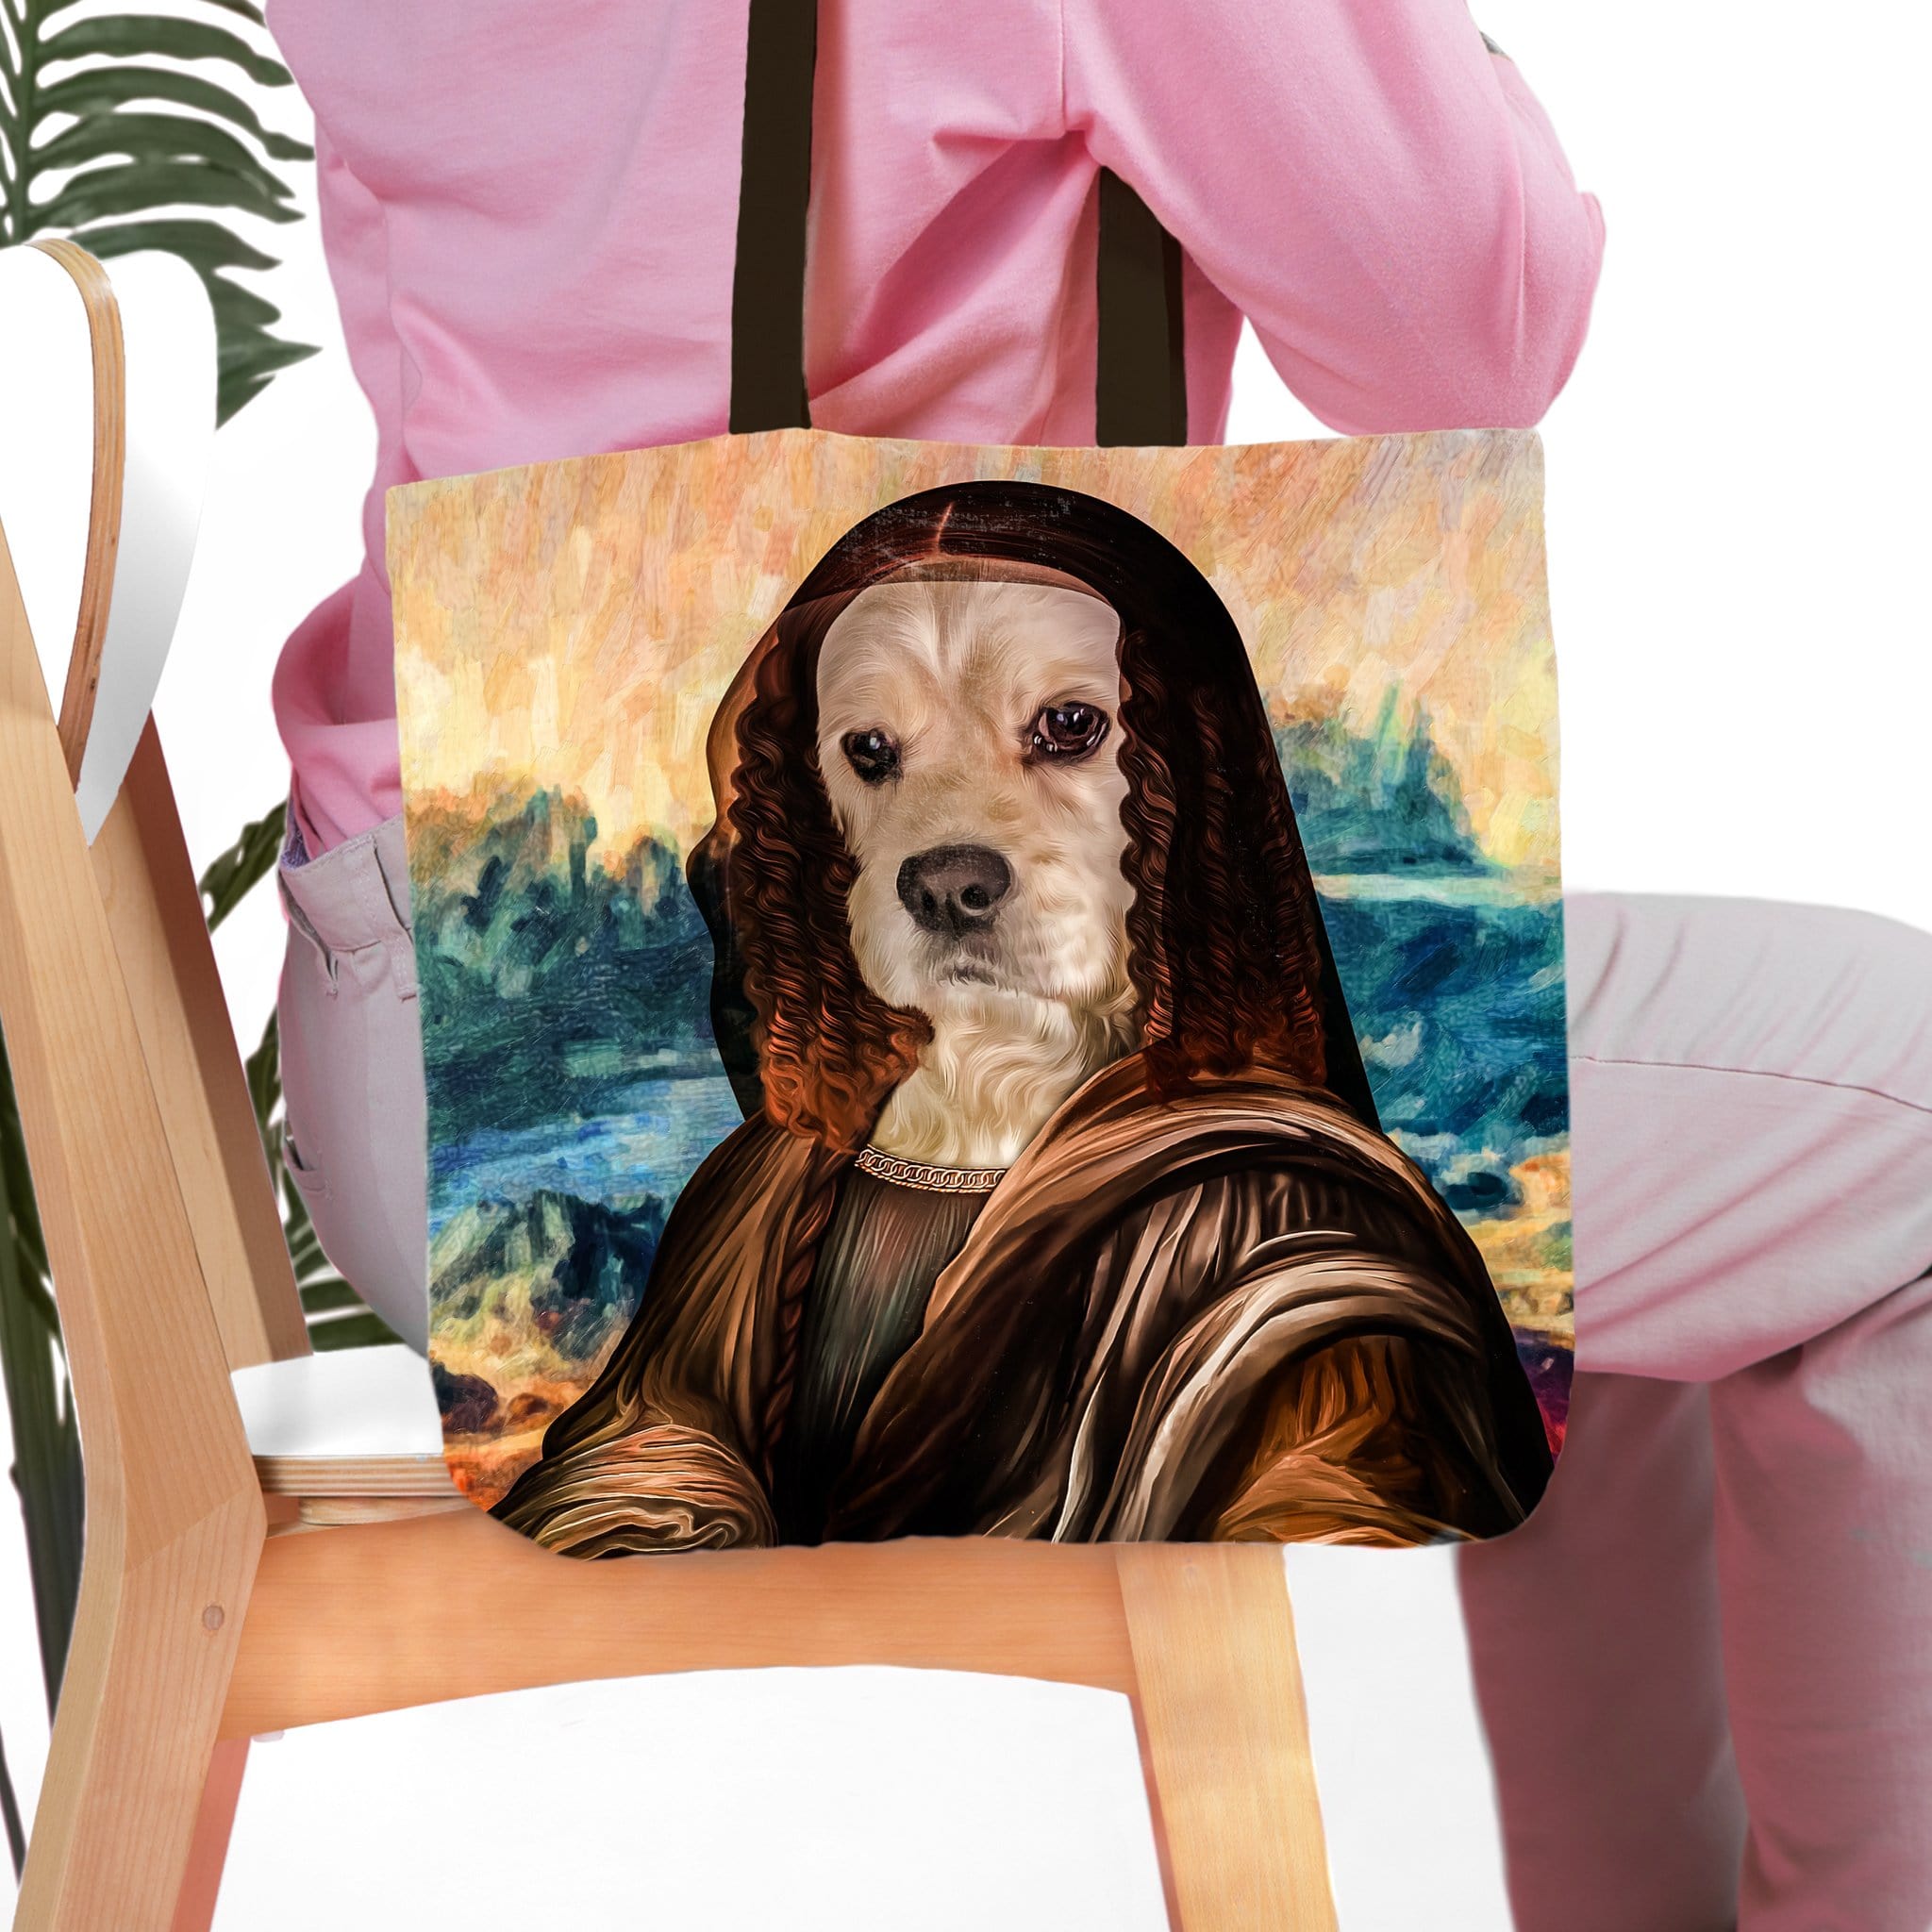 &#39;Dogga Lisa&#39; Personalized Tote Bag